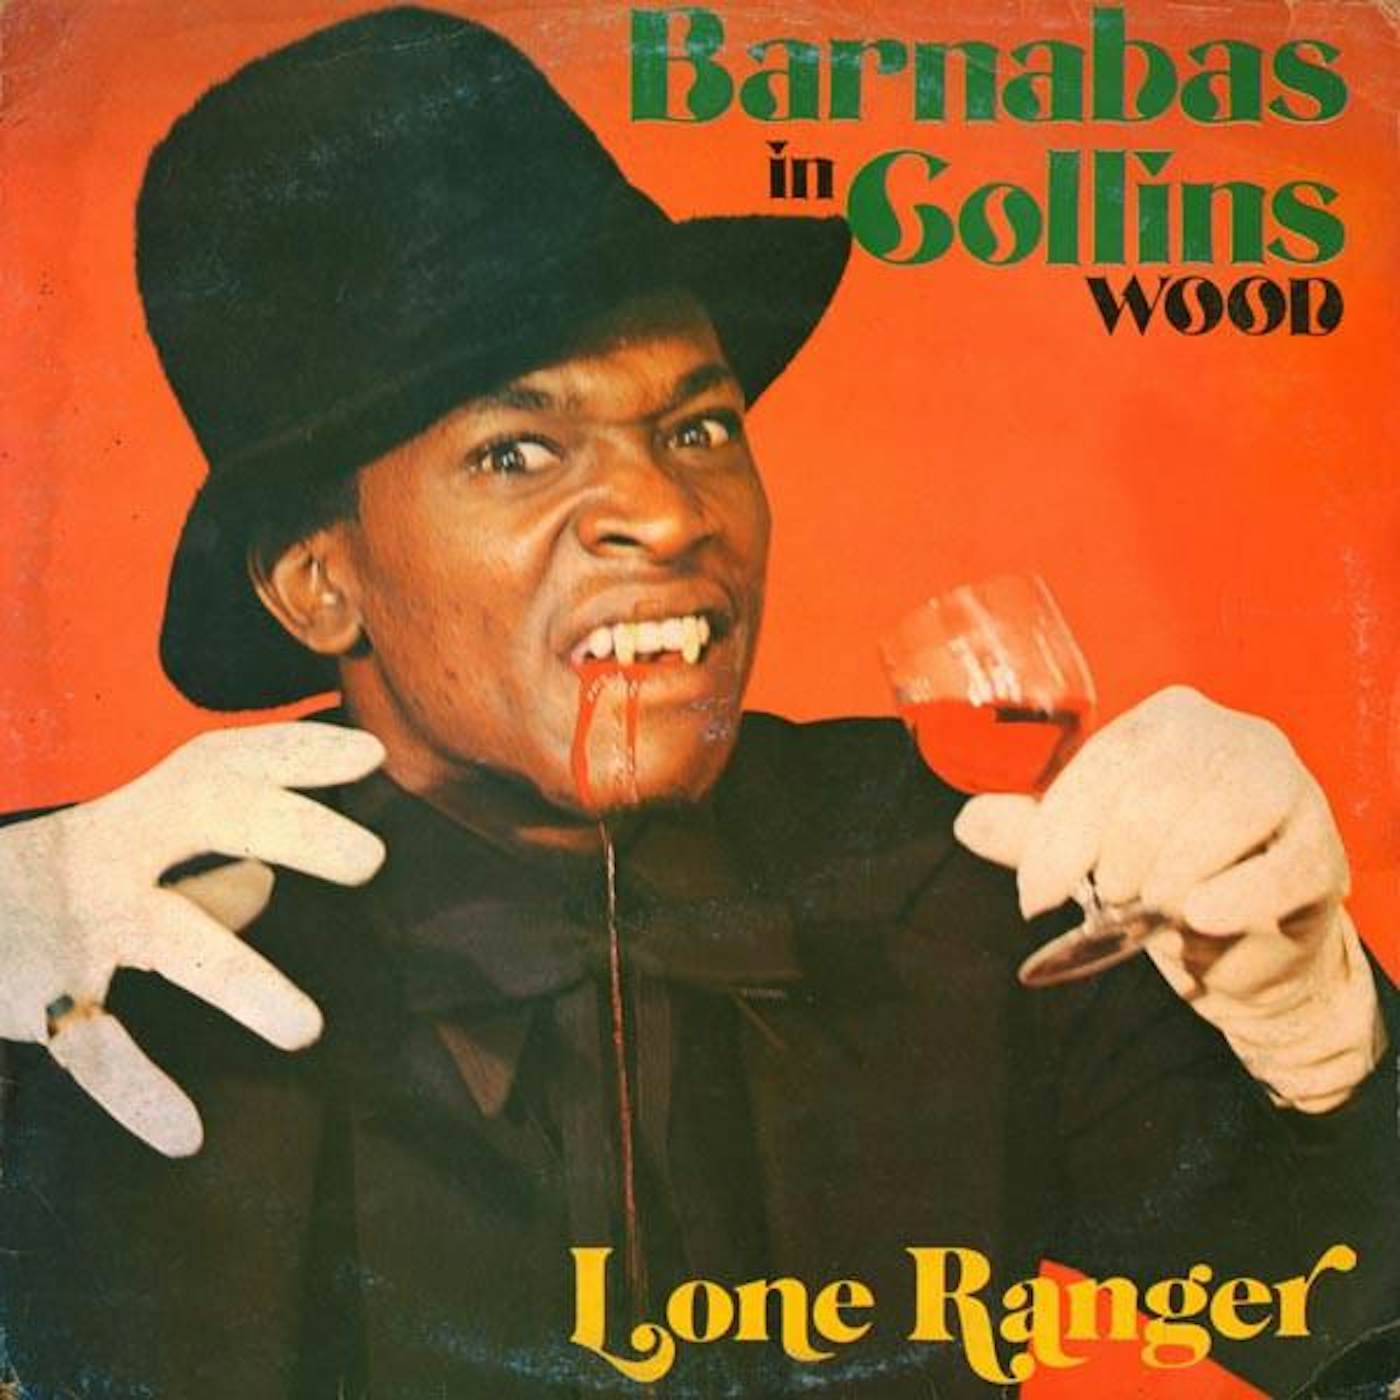 Lone Ranger Barnabas in Collins Wood Vinyl Record